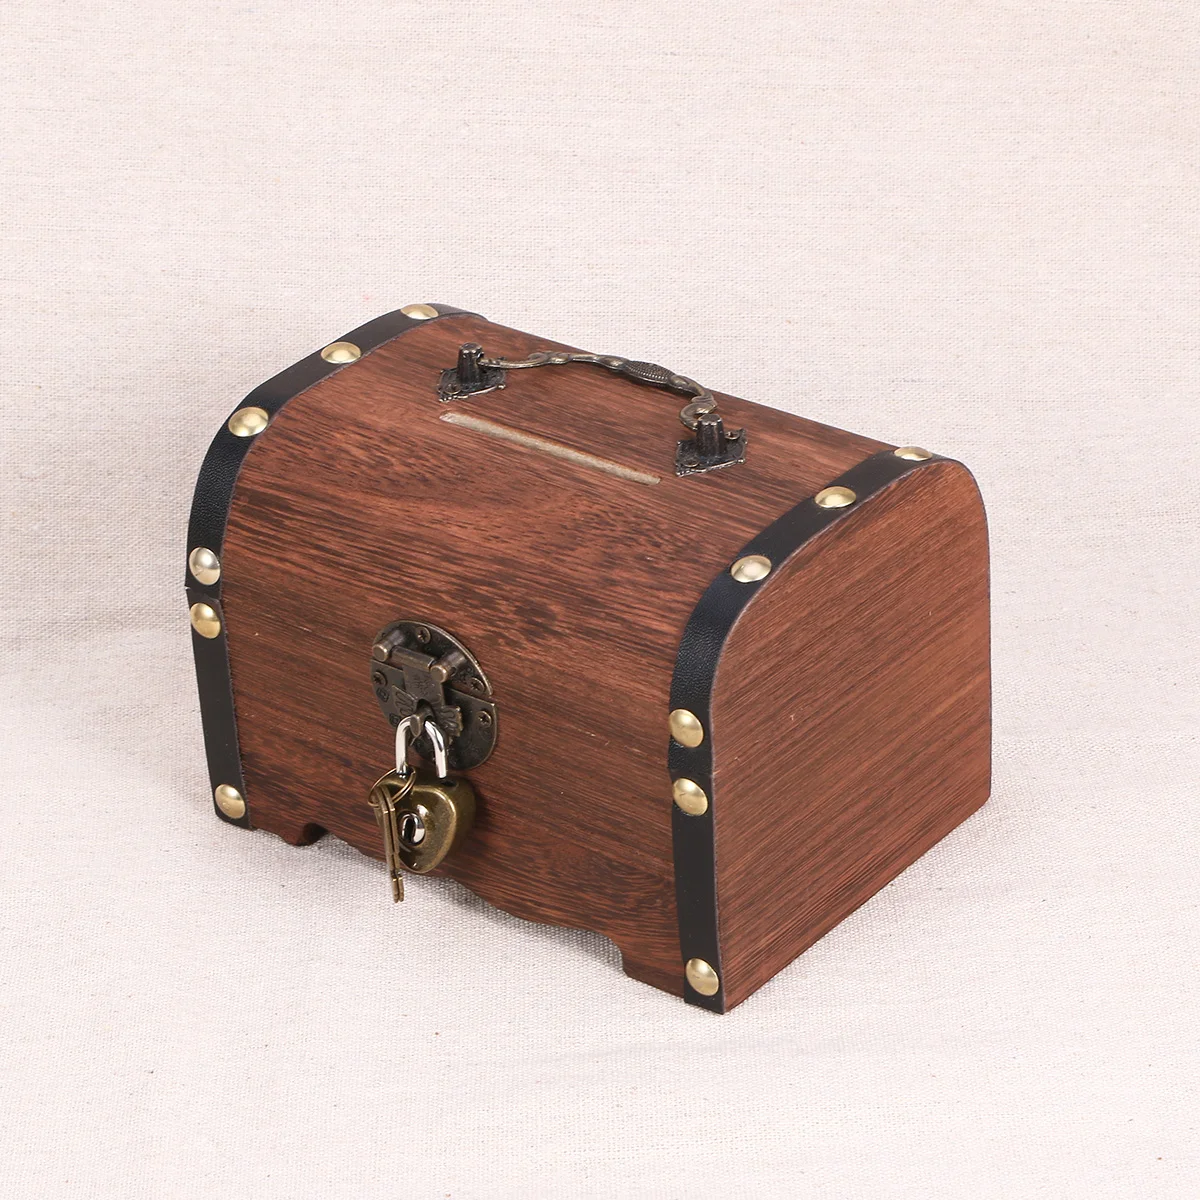 

Box Treasure Wooden Bank Storage Piggy Money Wood Vintage Lock Coin Boxes Jewelry Kids Saving Decorative Pirate Key Keepsake